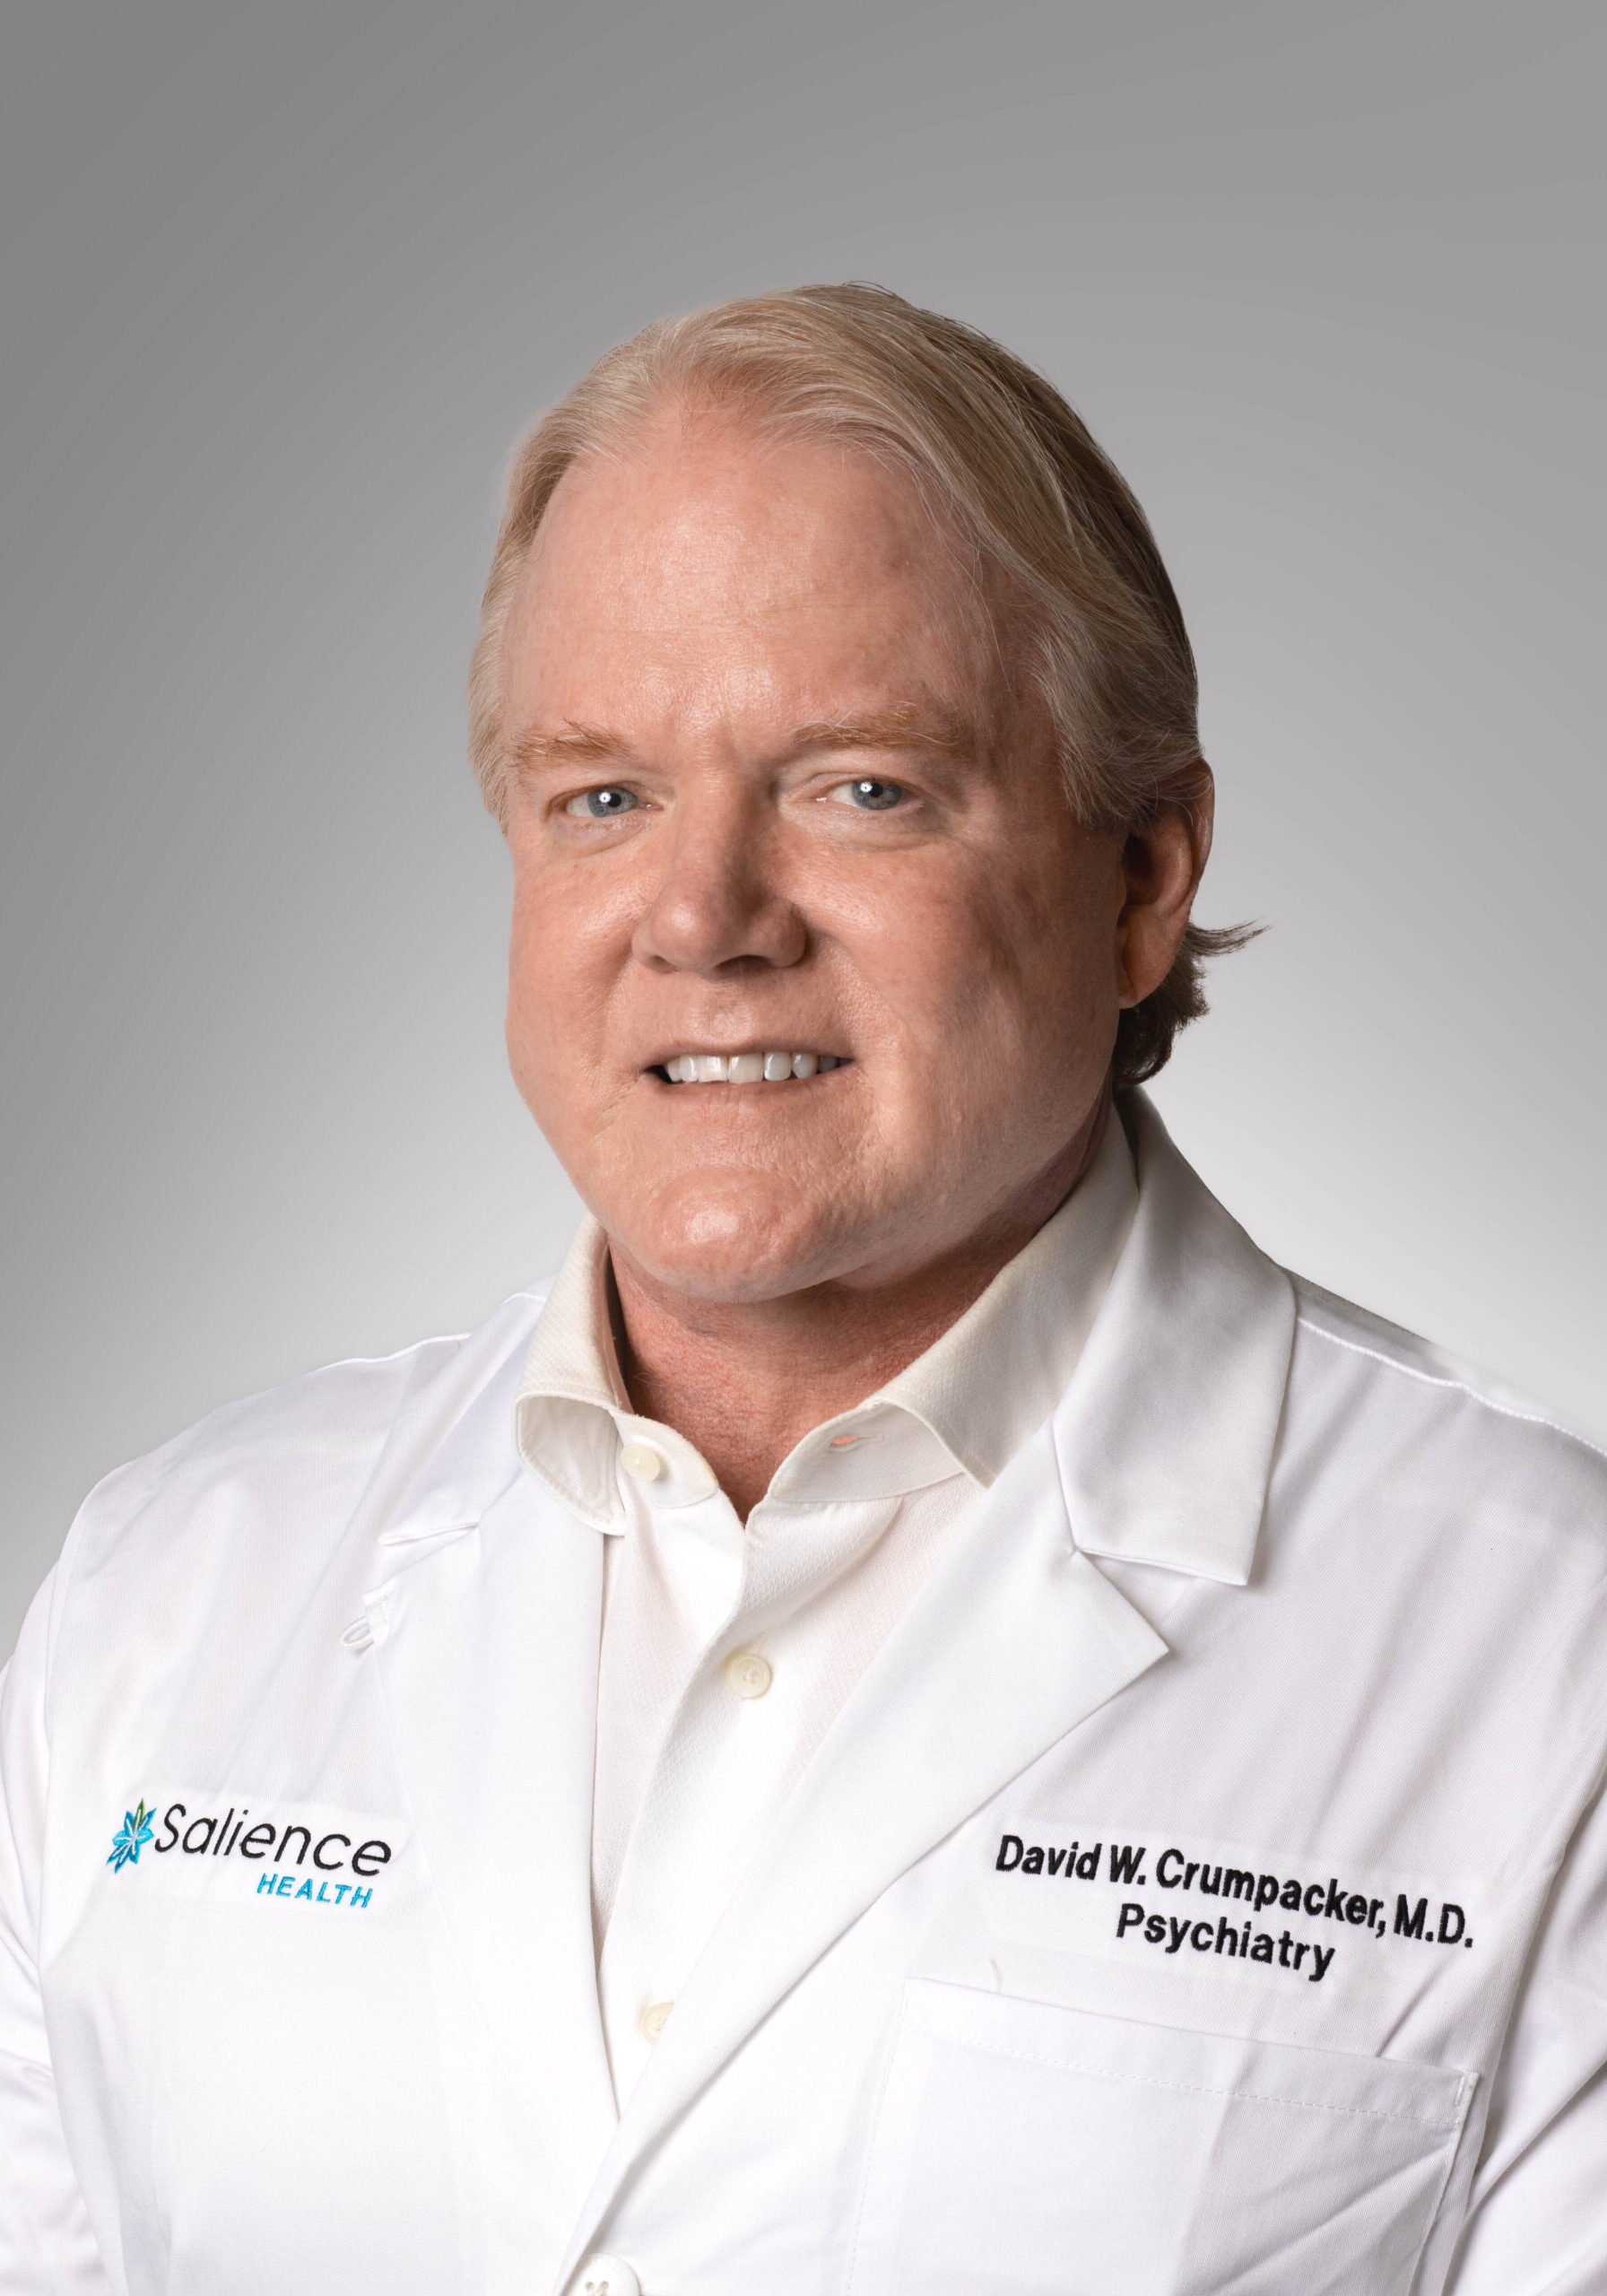 Dr. David Crumpacker, psychiatrist at Salience Health